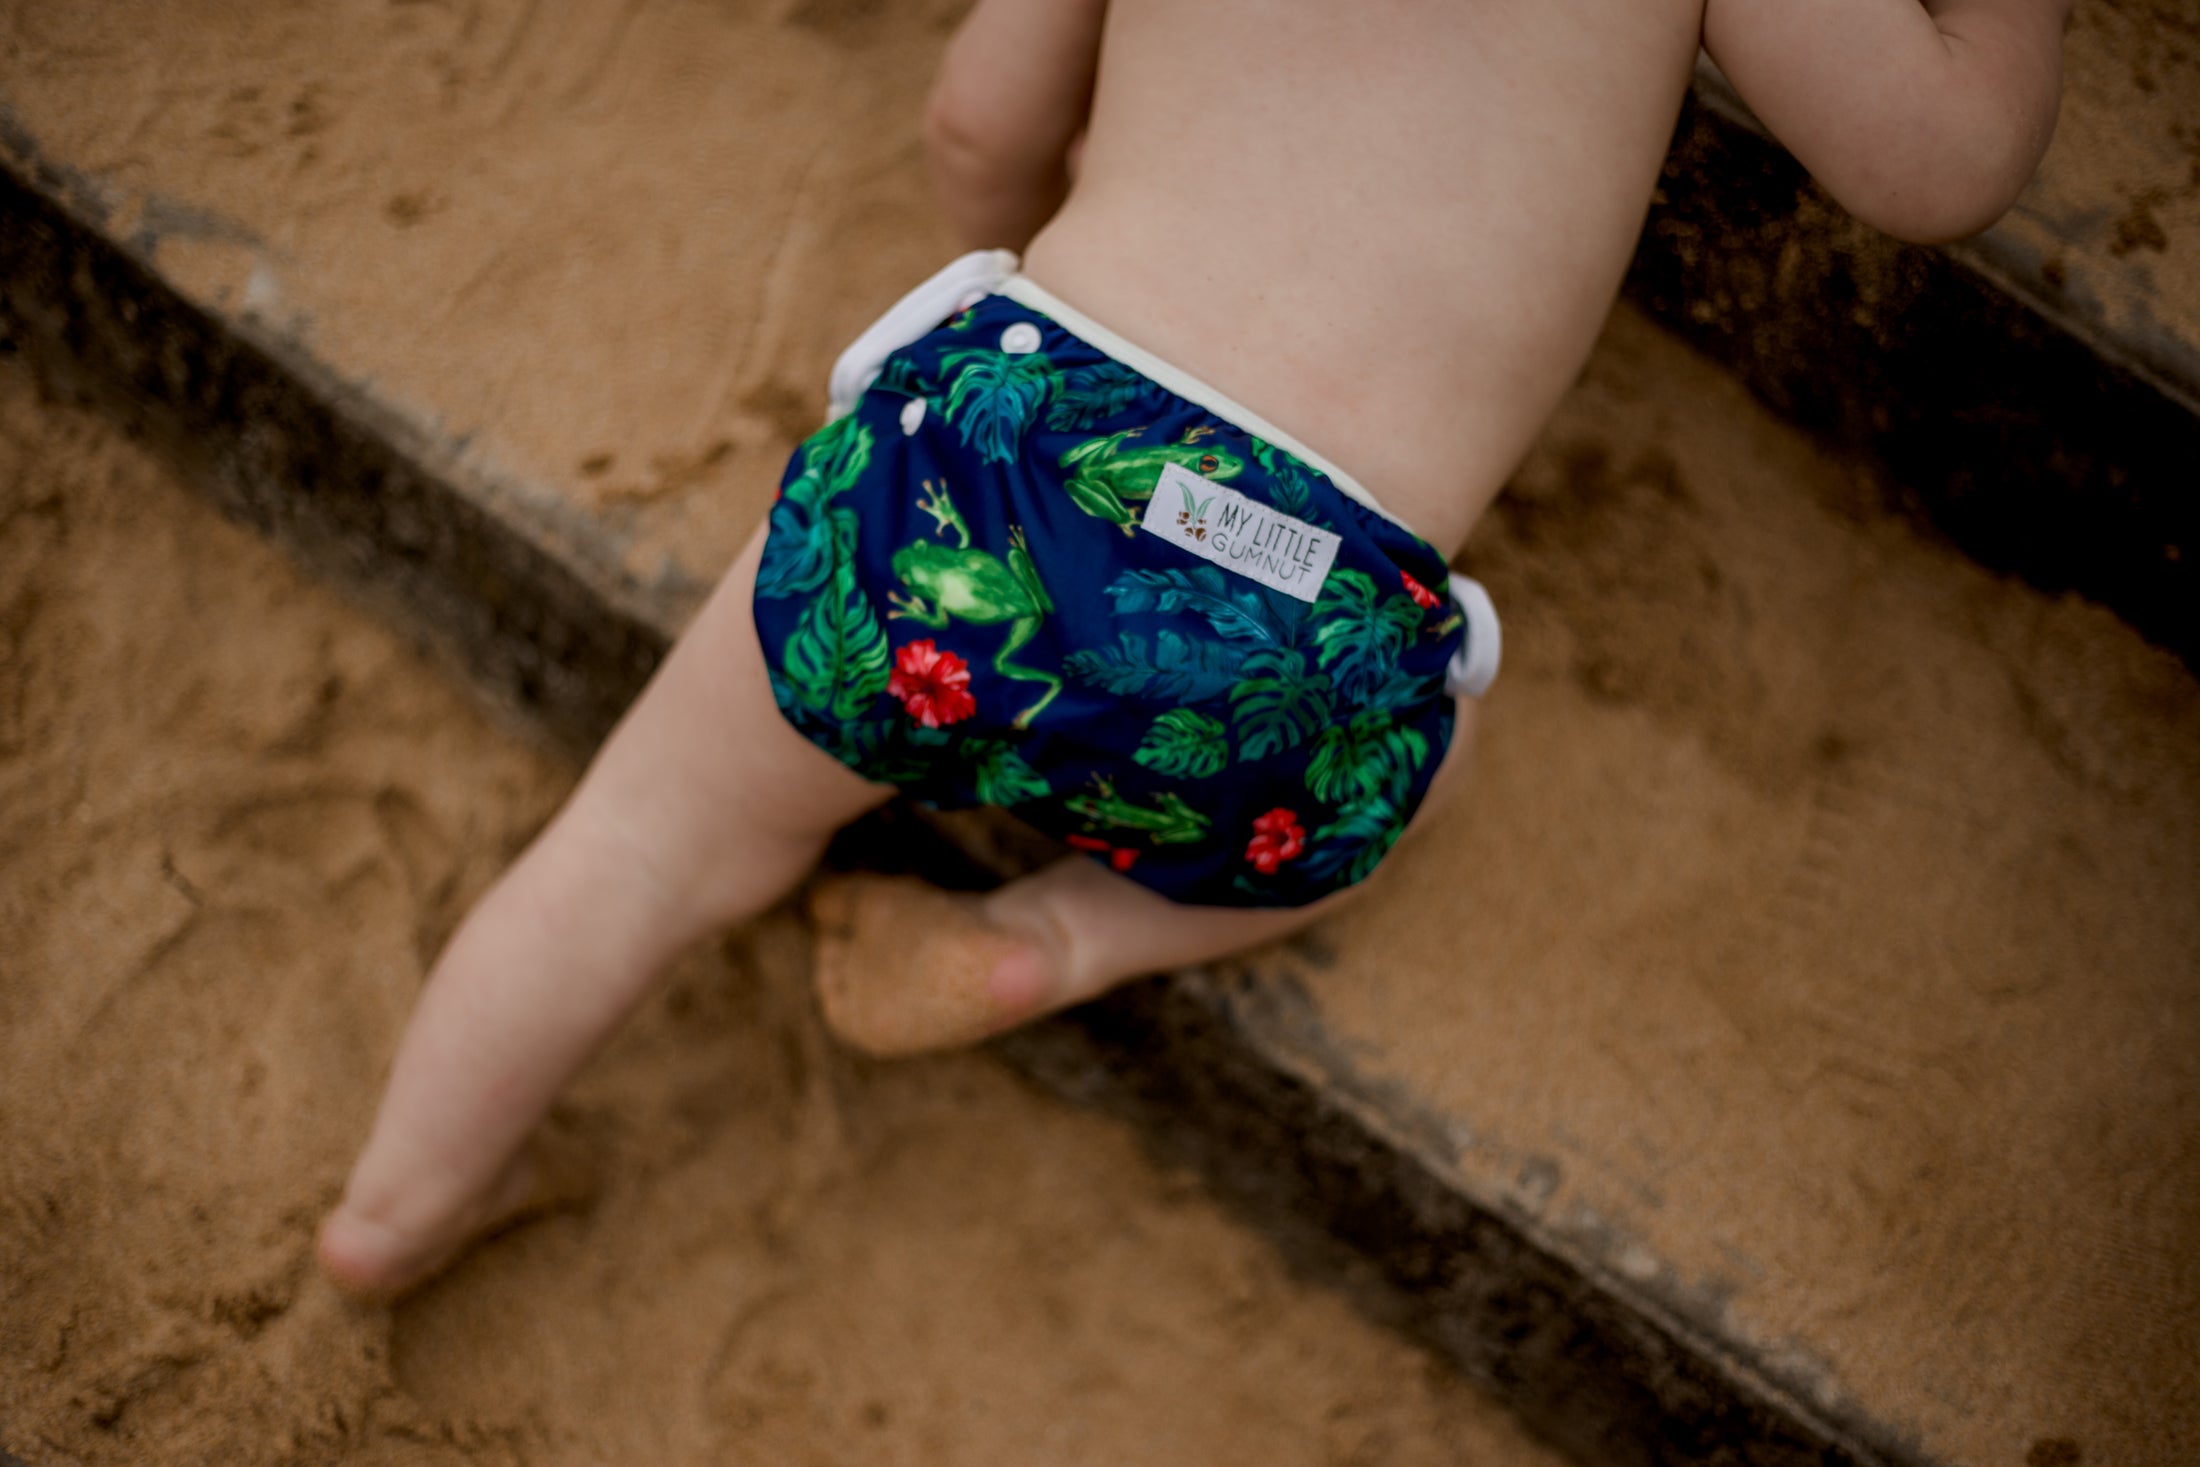 Beach baby wearing Tropical frog swimming nappy. Australian artist desgined swimming nappy. My little gumnut.